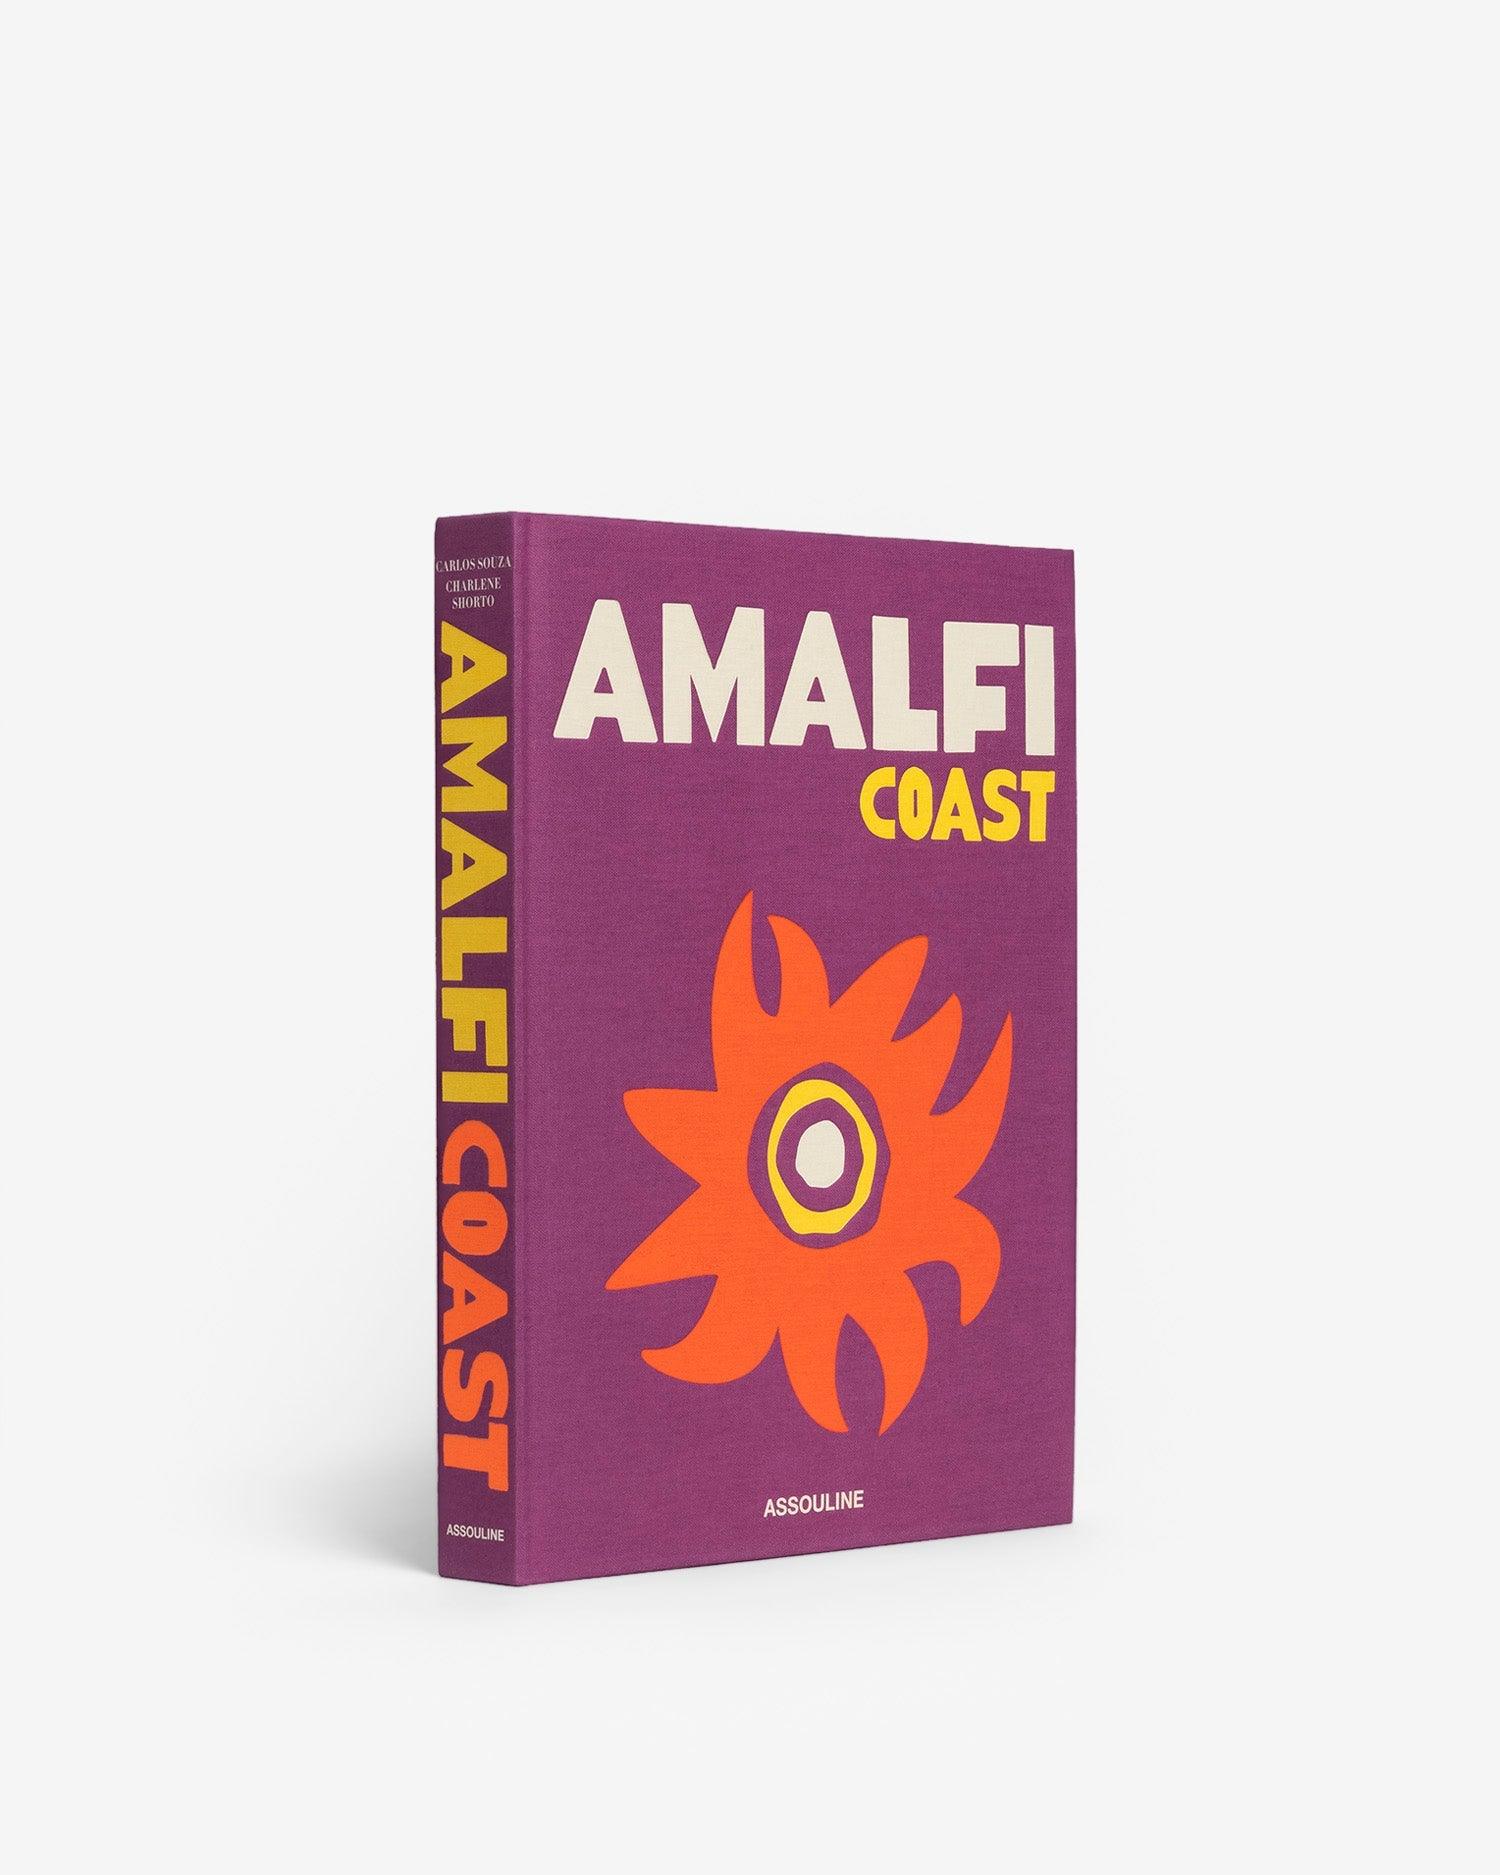 Amalfi Coast book by Carlos Souza and Charlene Shorto | ASSOULINE